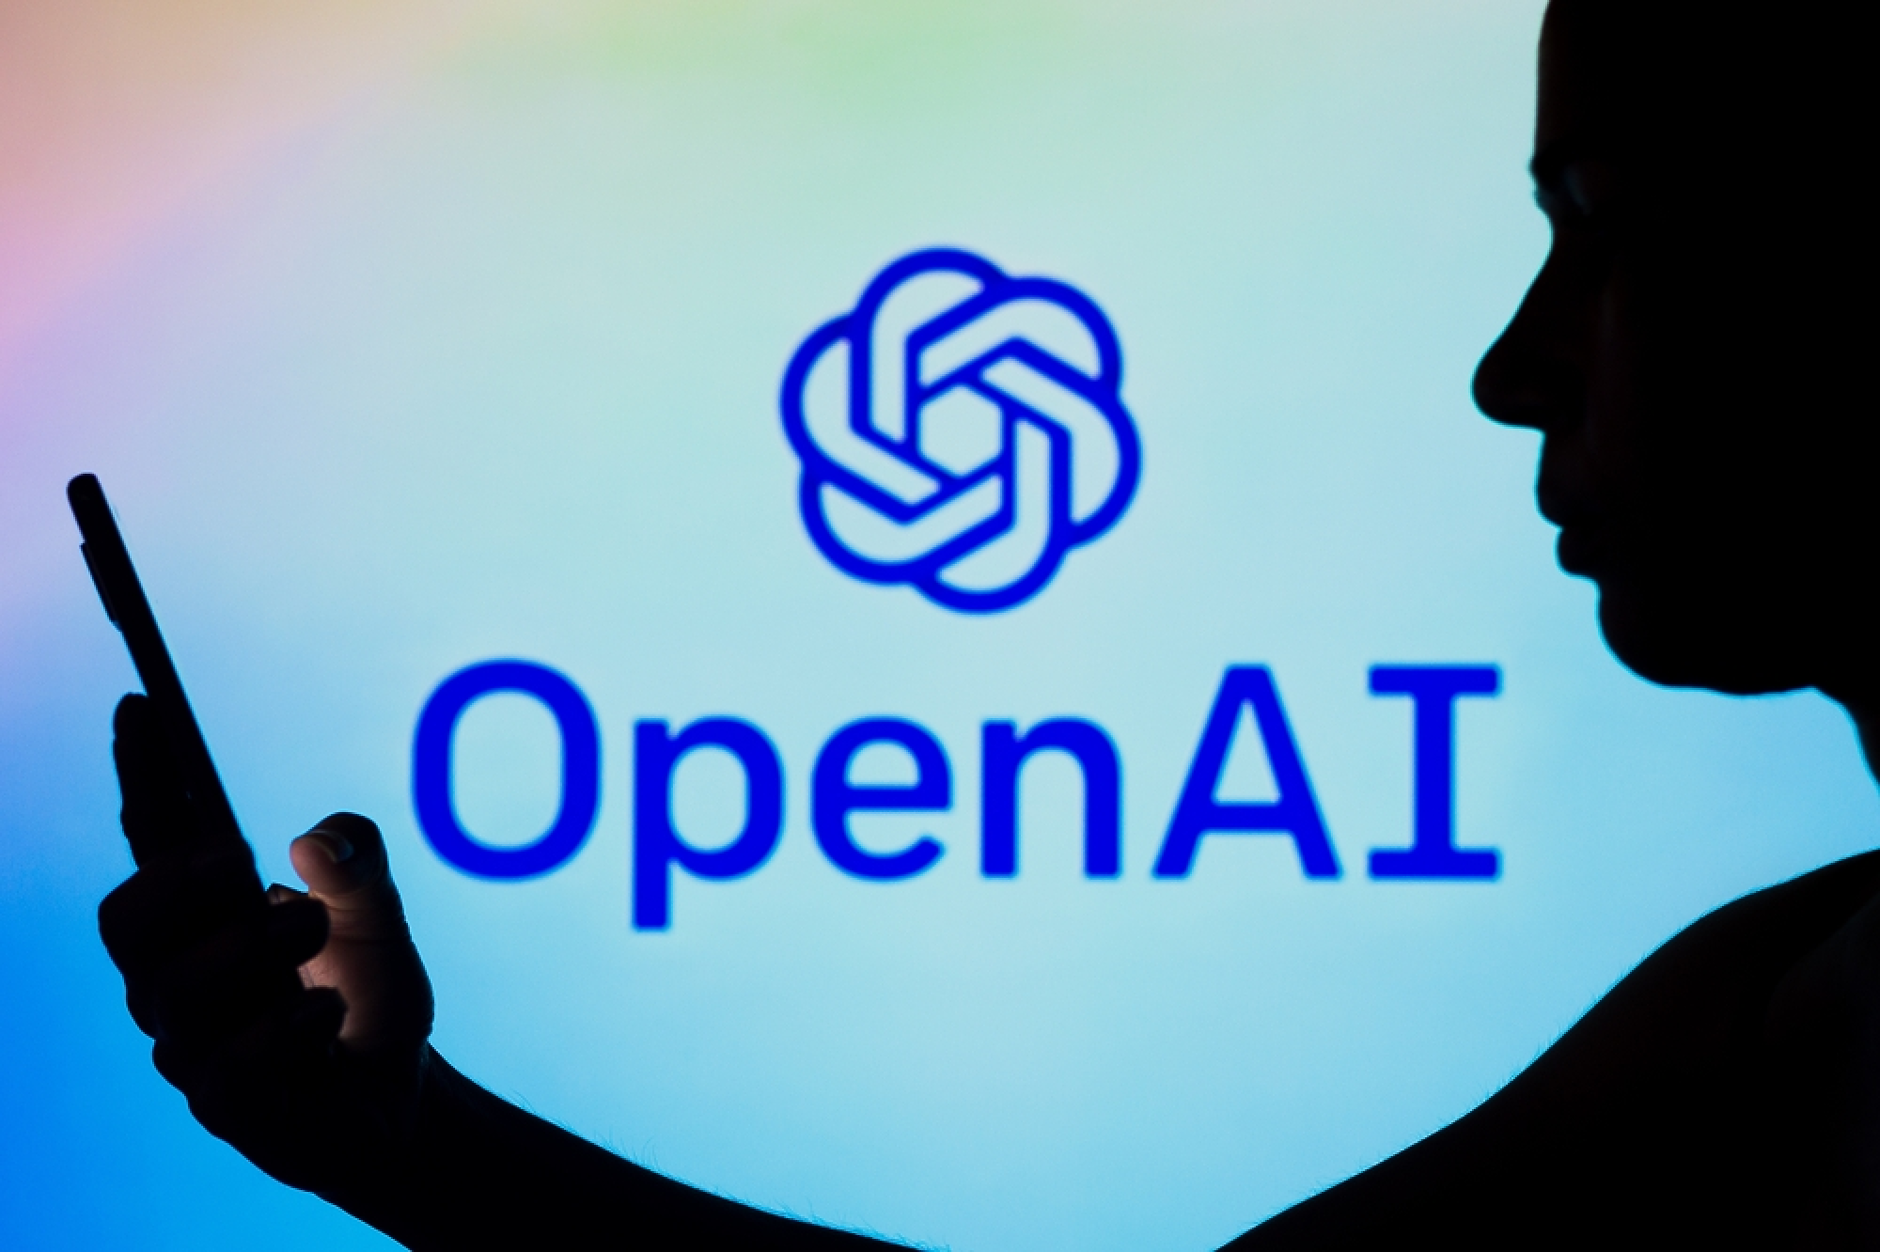 OpenAI обмисля производство на собствени ИИ чипове